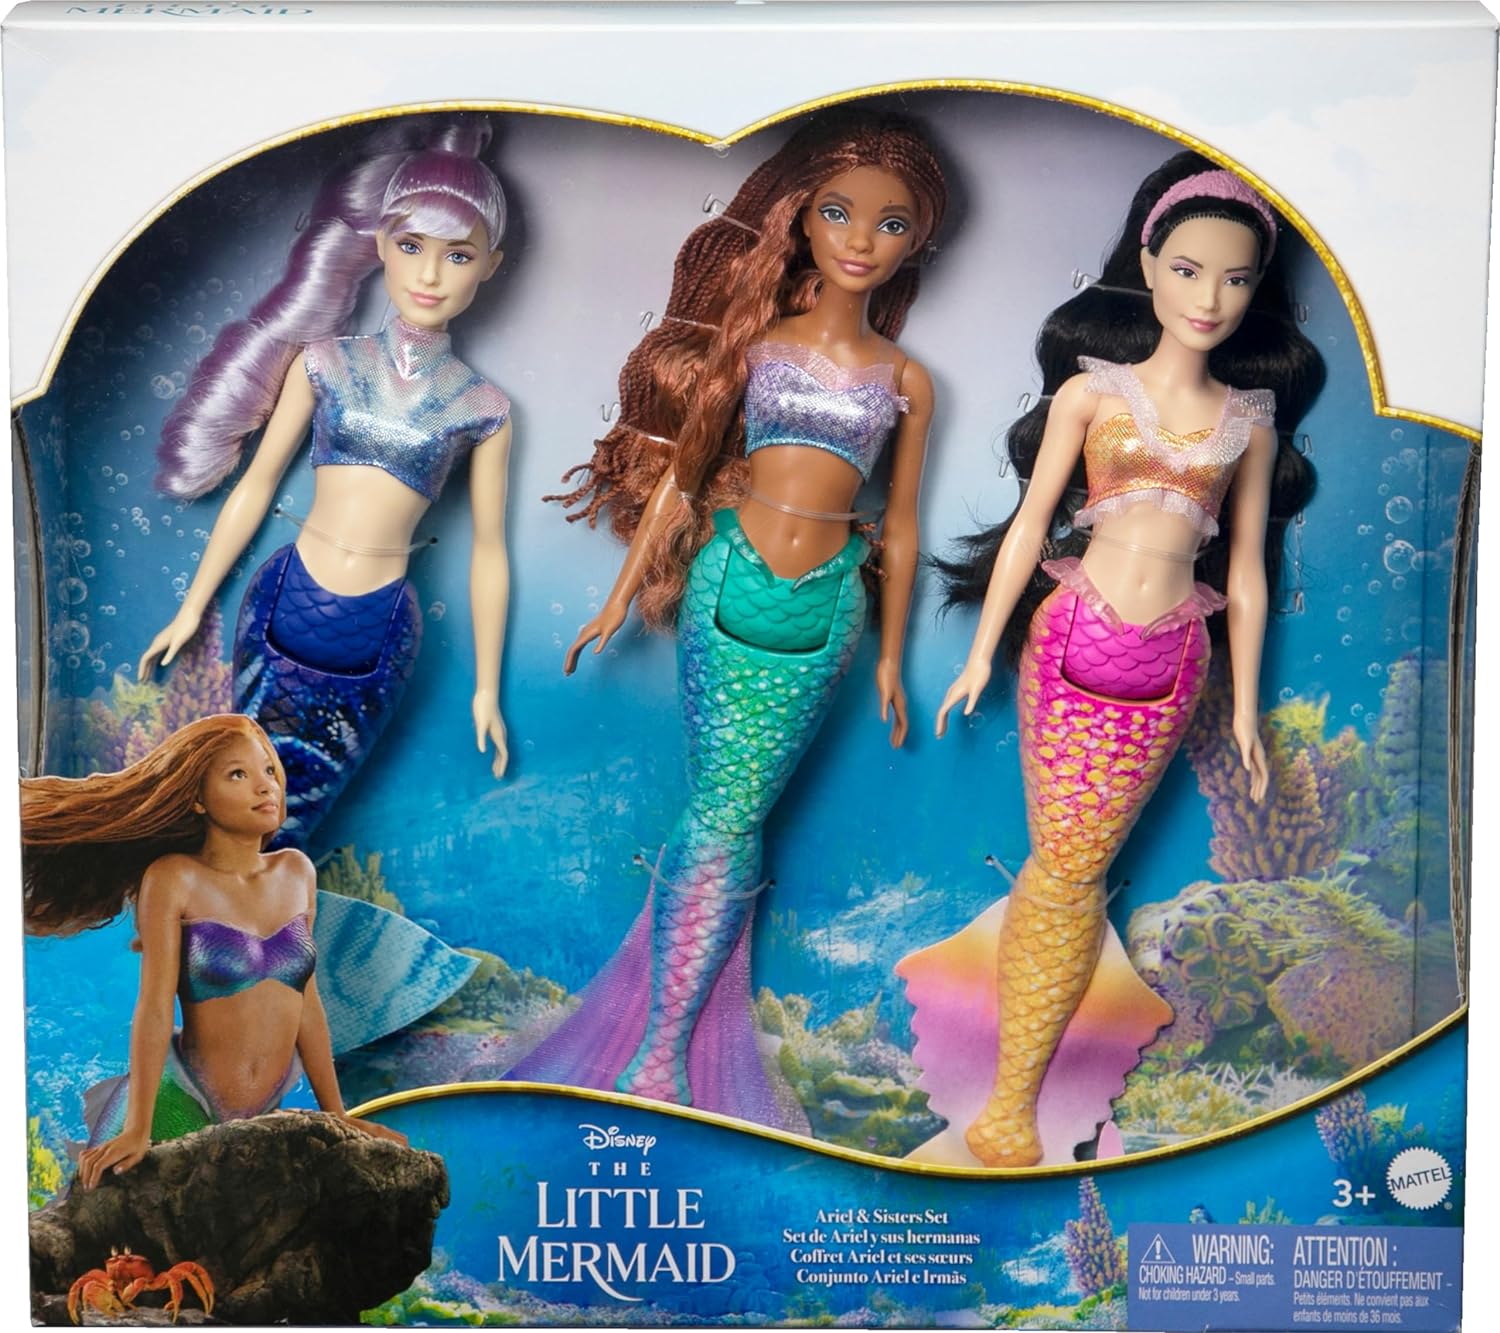 Mattel Disney The Little Mermaid Ariel Sisters Doll Set with 3 Fashion Mermaid Dolls, Includes Mala, Karina, and Ariel